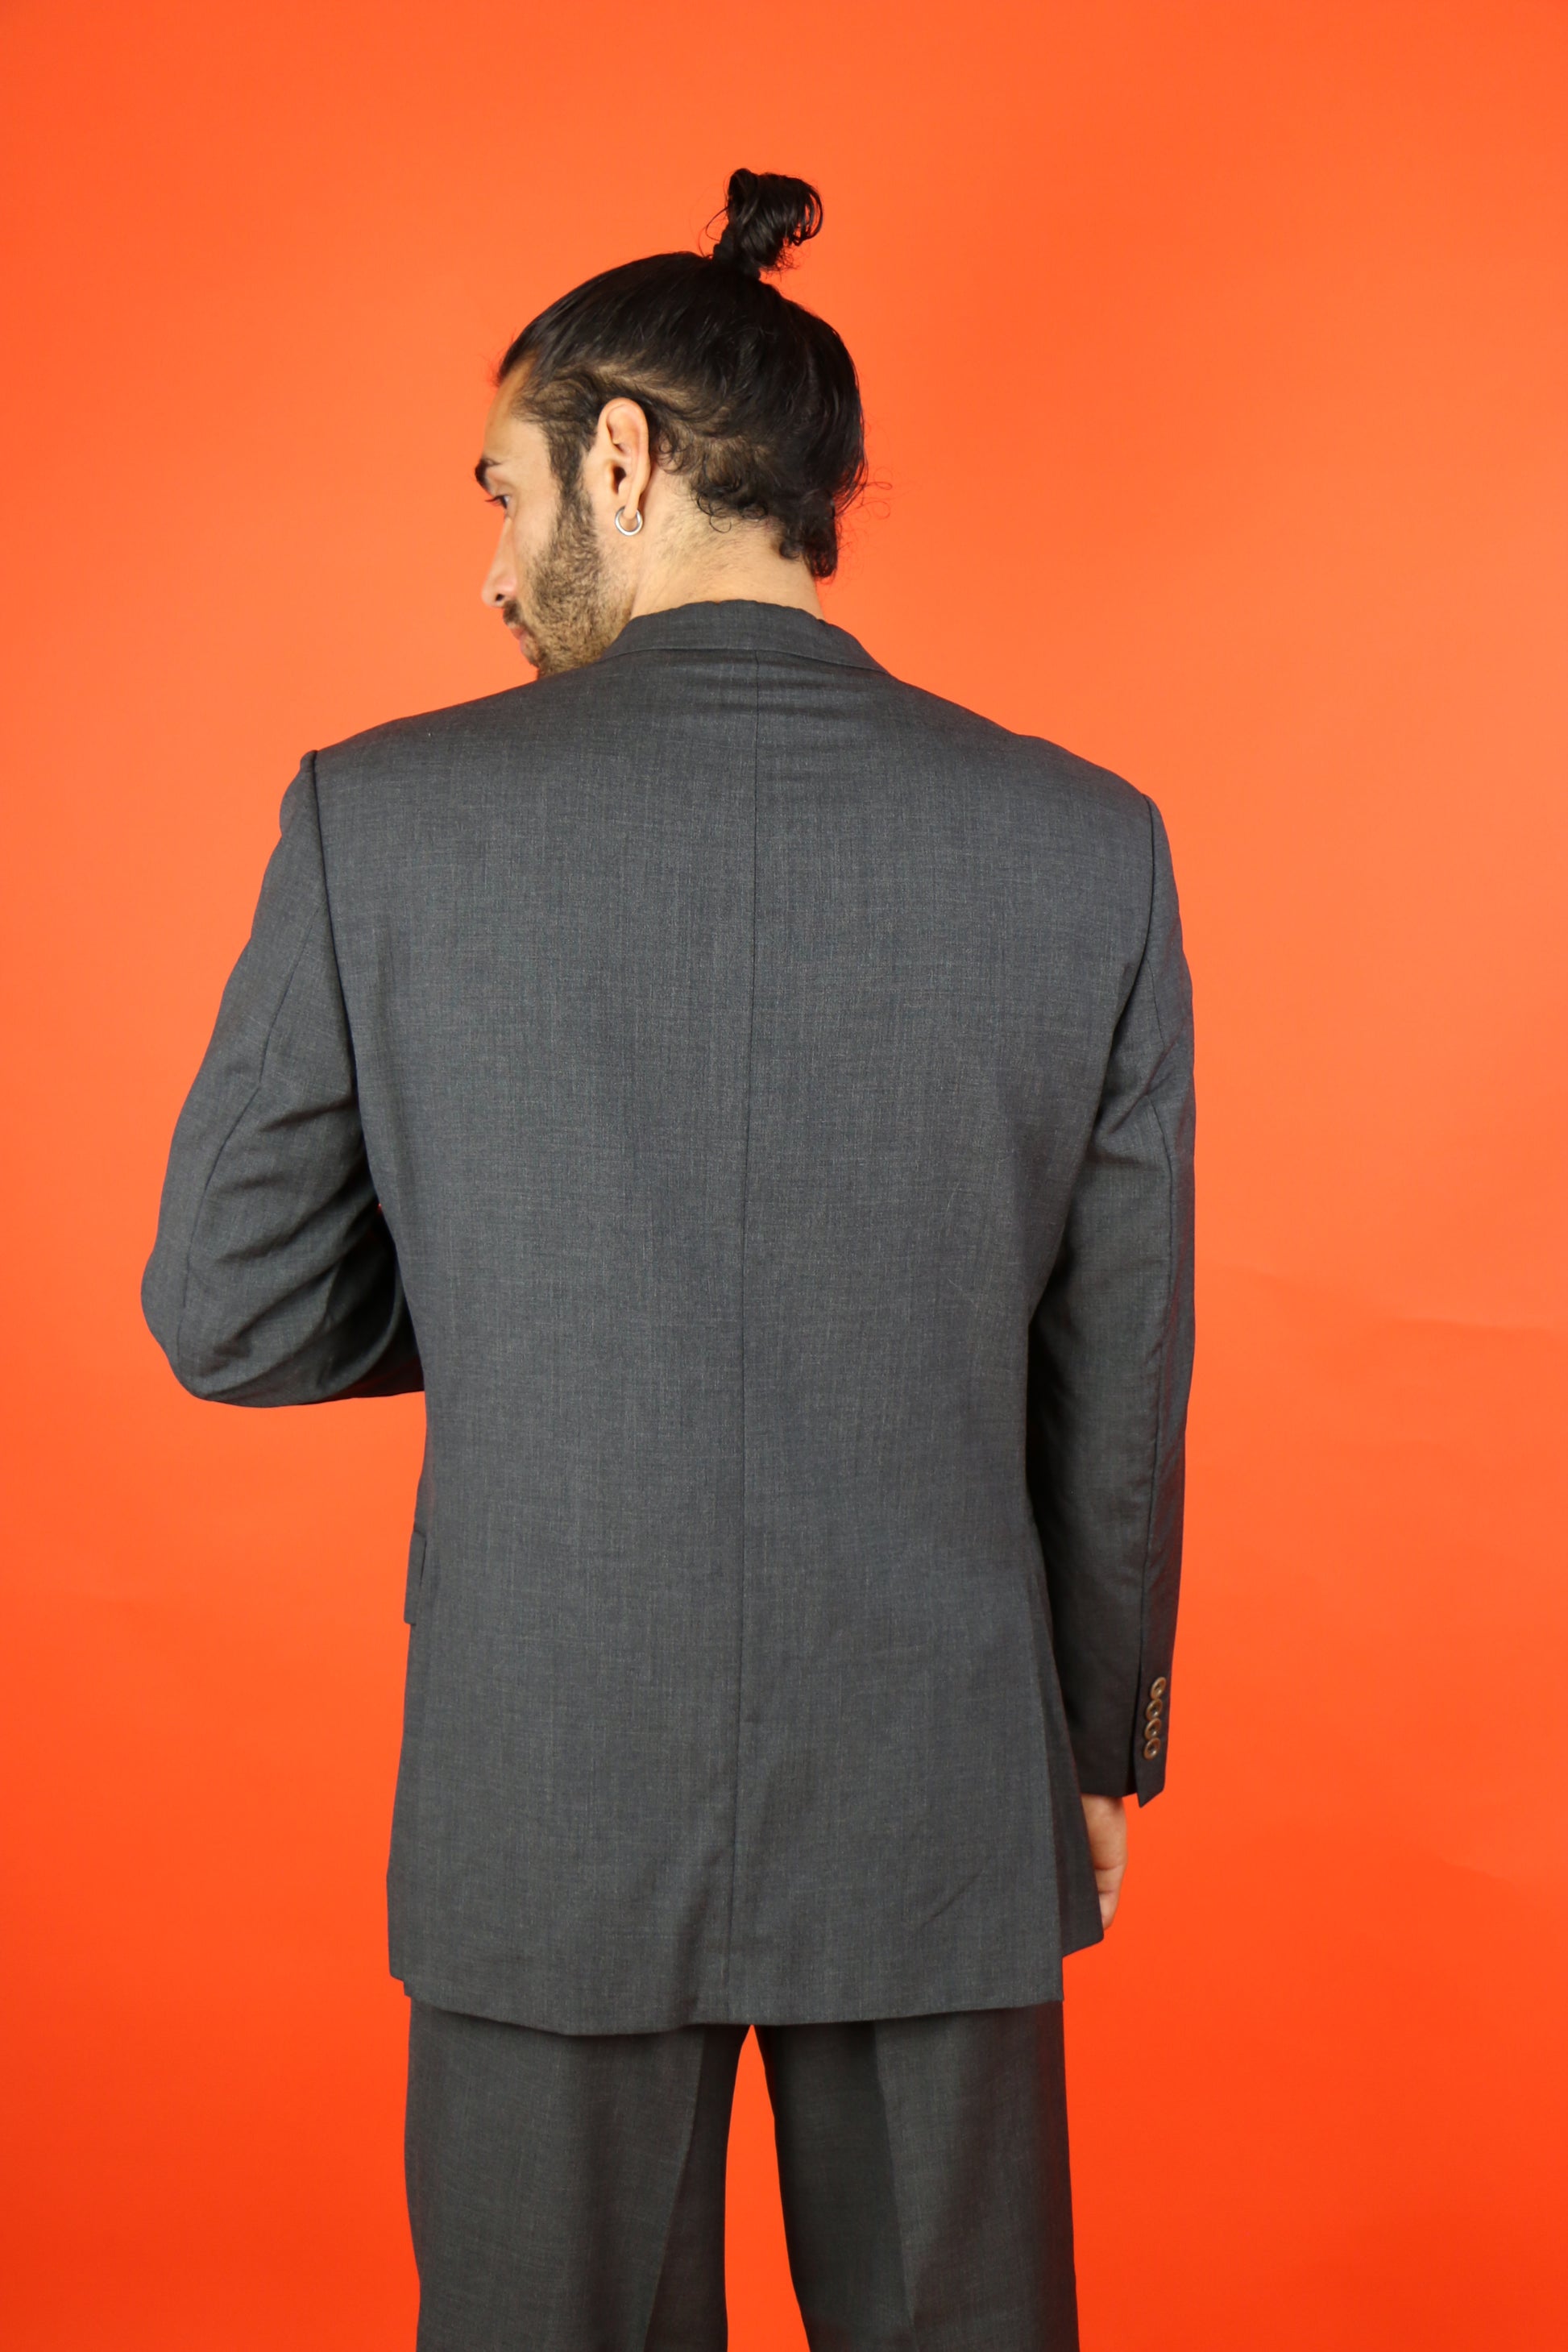 Hugo Boss Wool Suit Jacket with Pants - vintage clothing clochard92.com